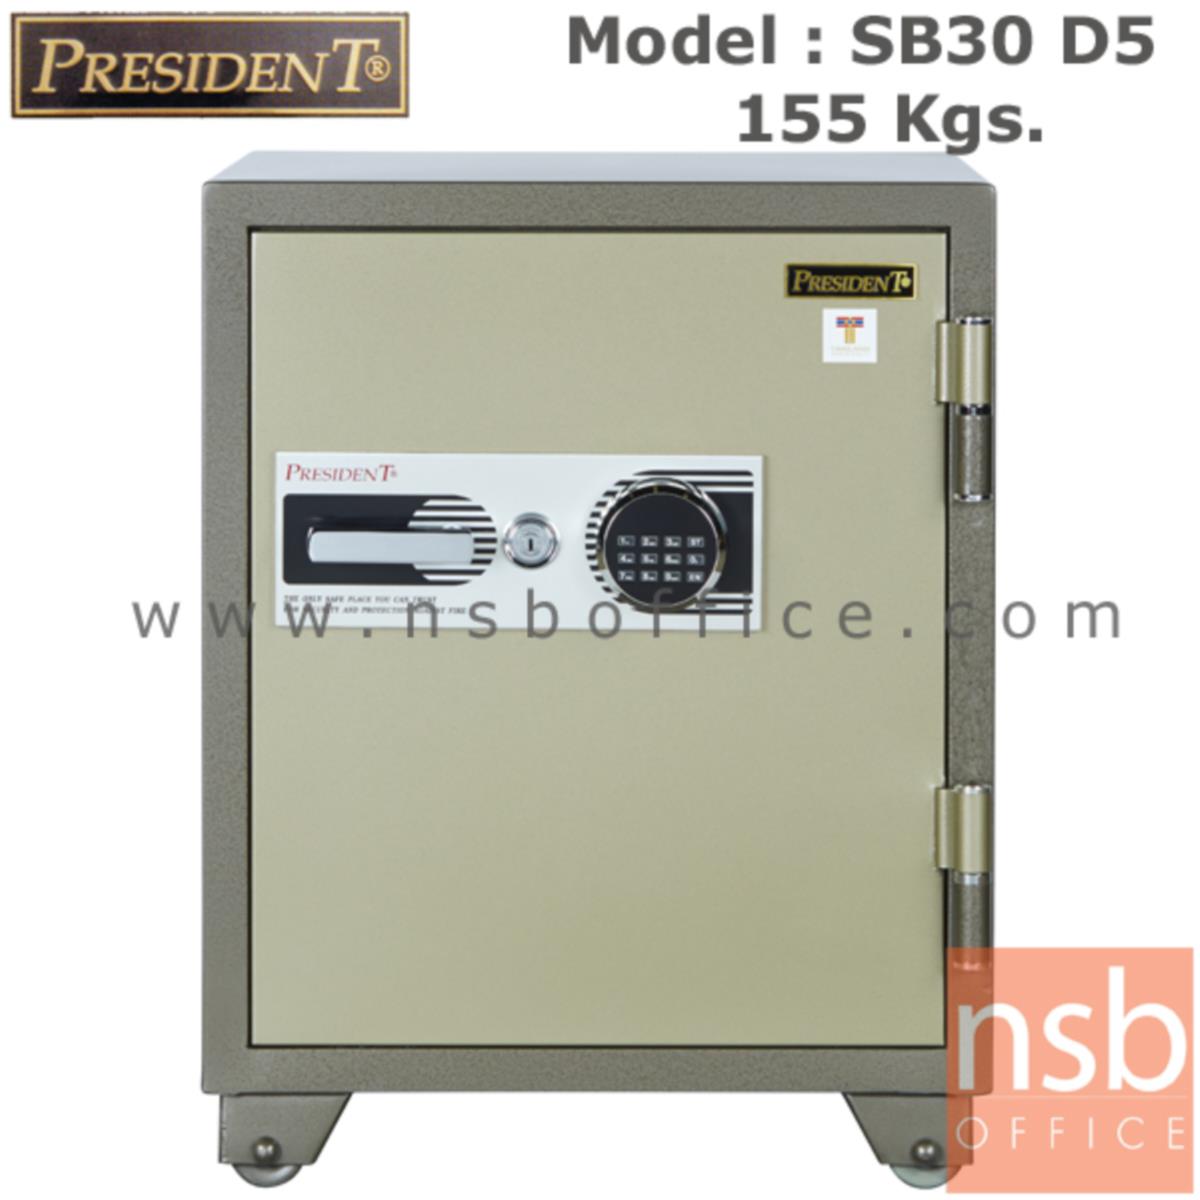 F05A061:ตู้เซฟนิรภัยชนิดดิจิตอลแบบใหม่ 155 กก. รุ่น PRESIDENT-SB30D5 มี 1 กุญแจ 1 รหัส (รหัสใช้กดหน้าตู้)